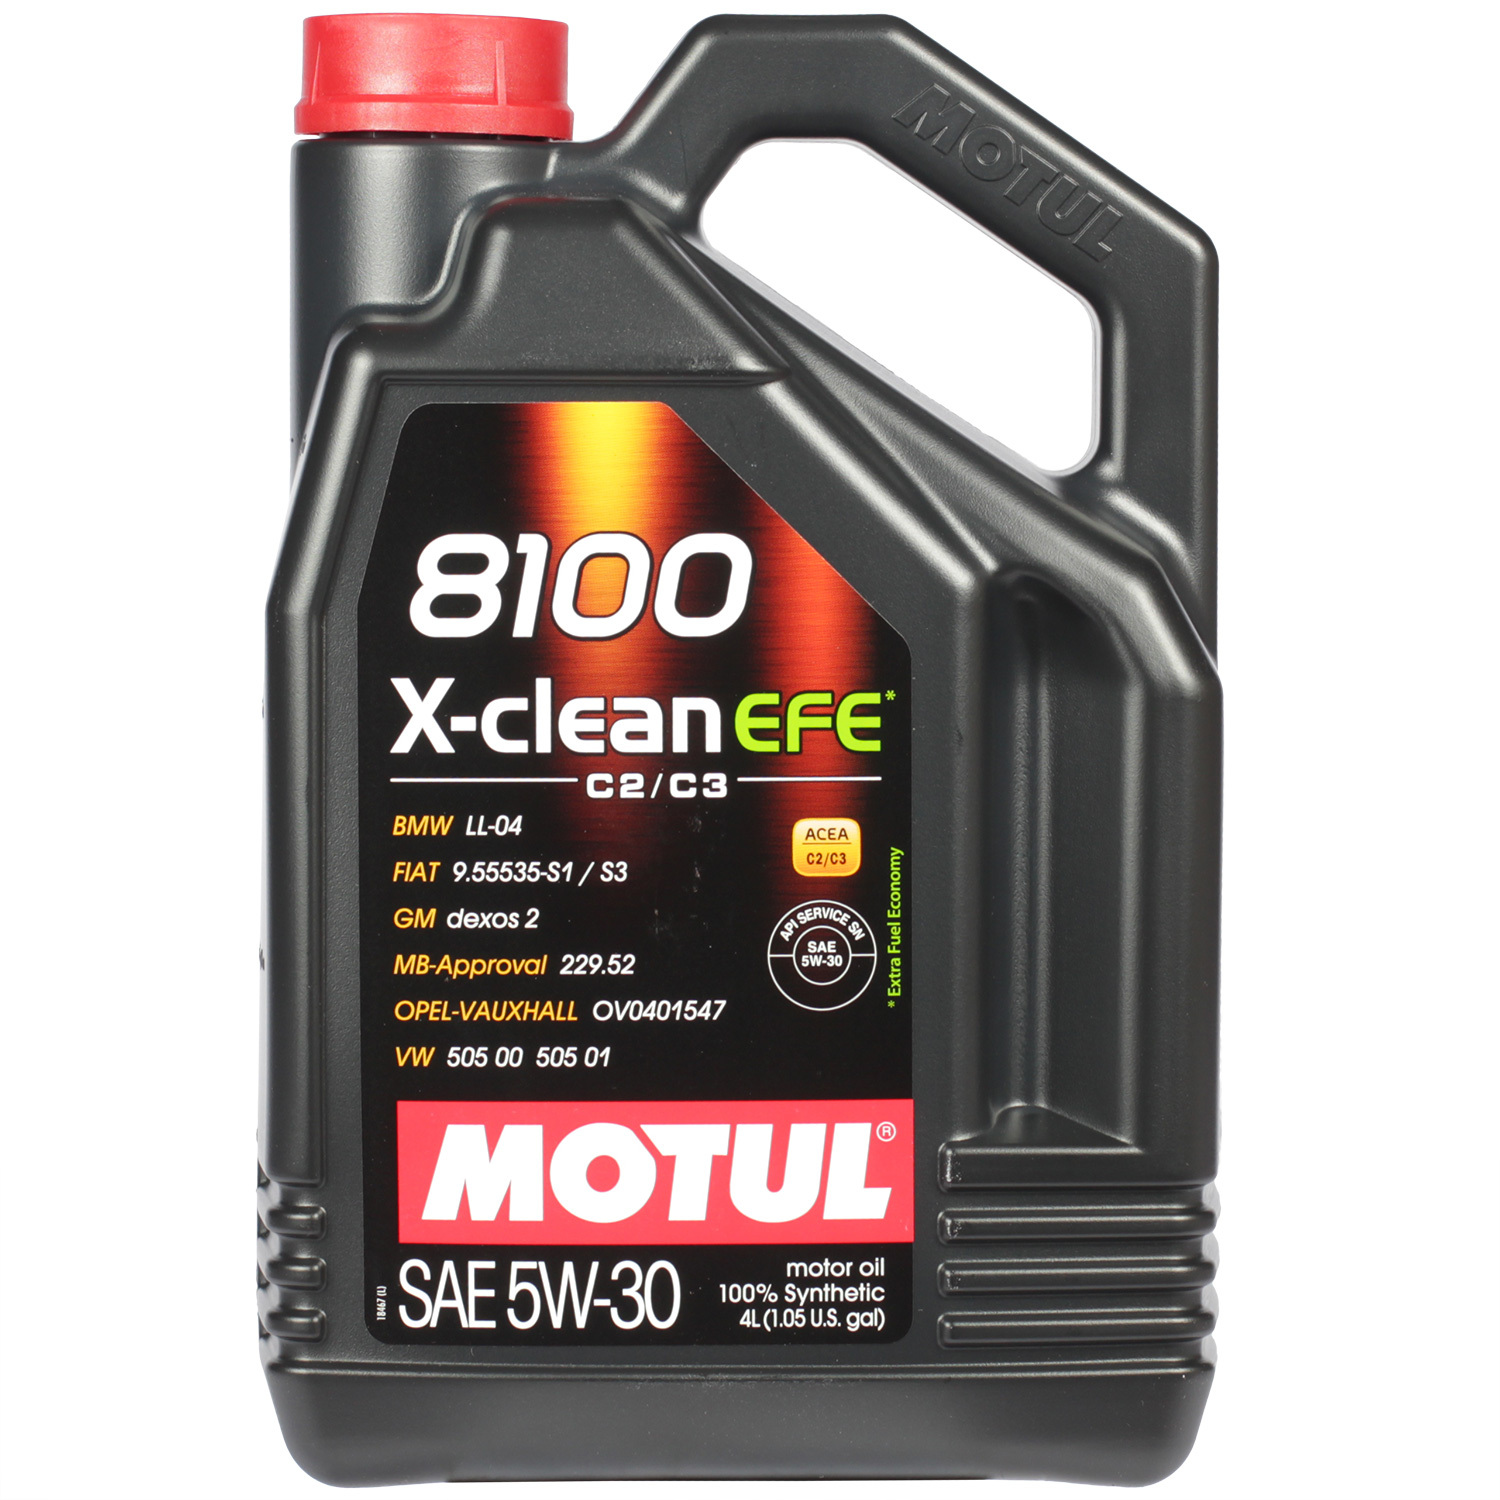 Motul Моторное масло Motul 8100 X-clean EFE 5W-30, 4 л motul моторное масло motul 8100 x cess 5w 40 60 л